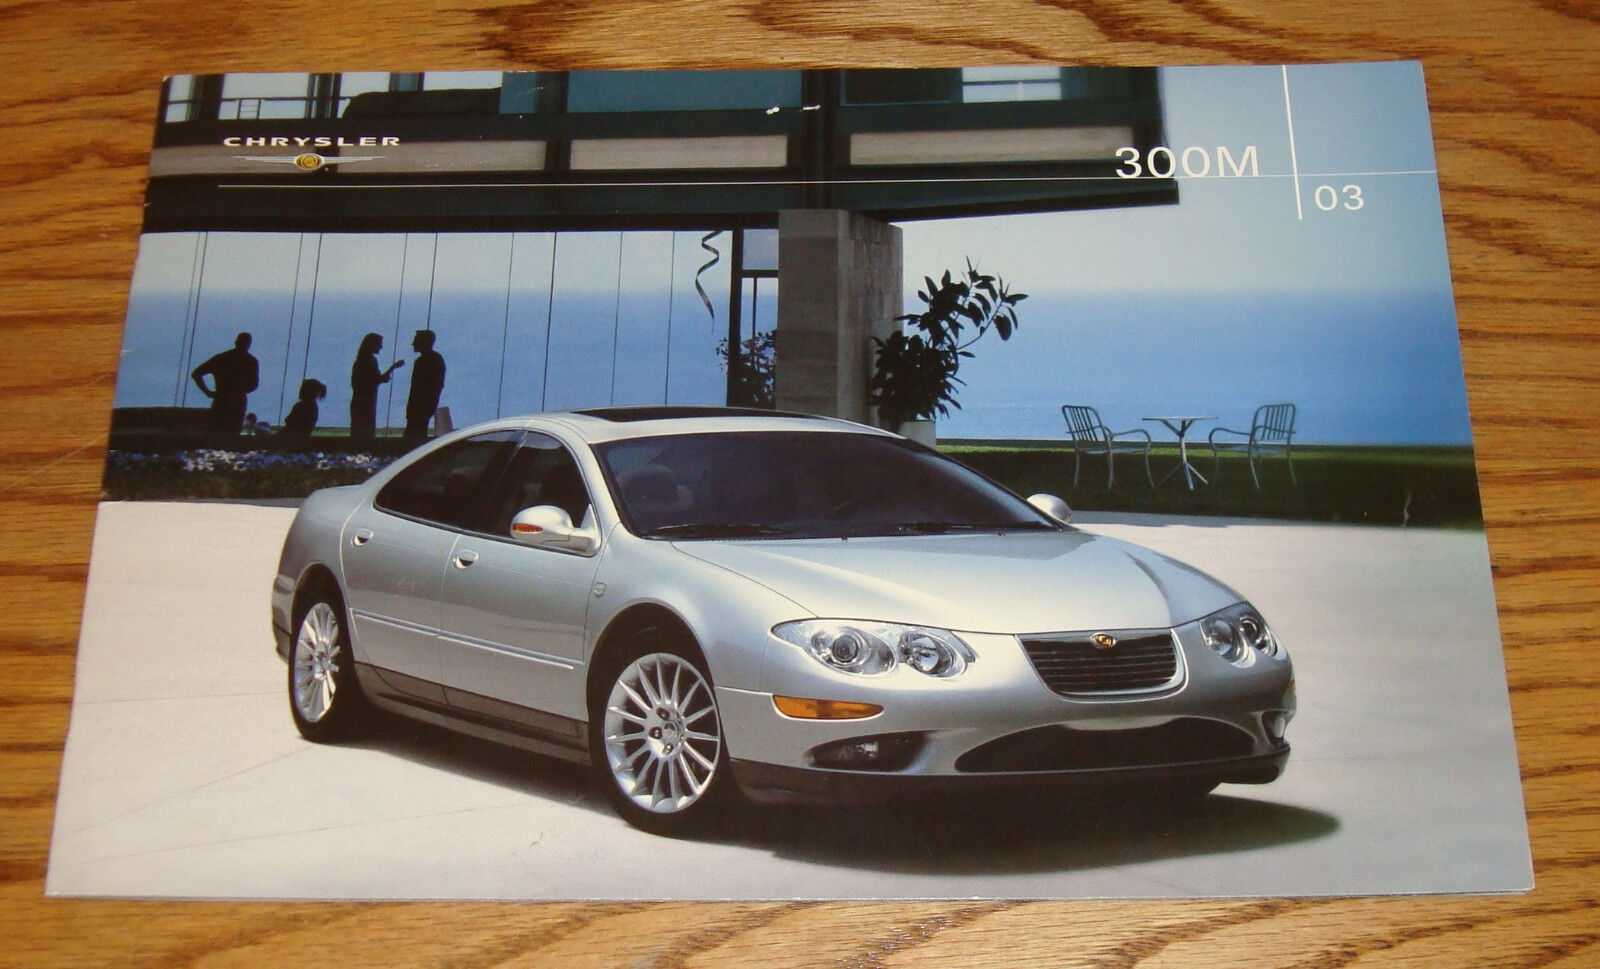 Original 2003 Chrysler 300M Deluxe Sales Brochure 03 | eBay